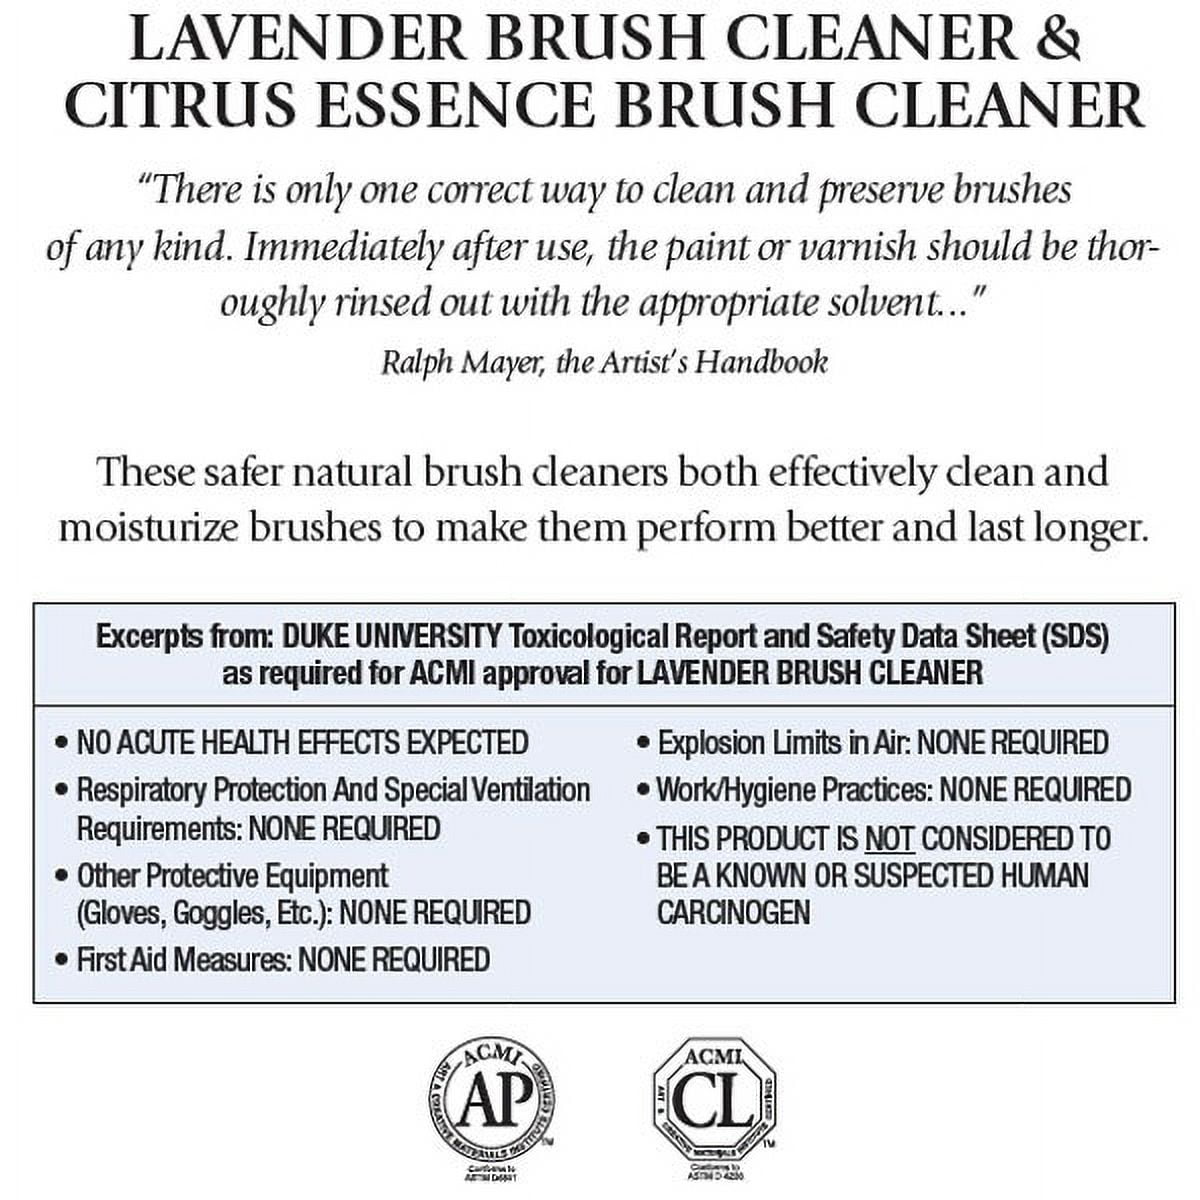 CCS Lavender & Olive Oil Brush Soap™ - New Wave Art